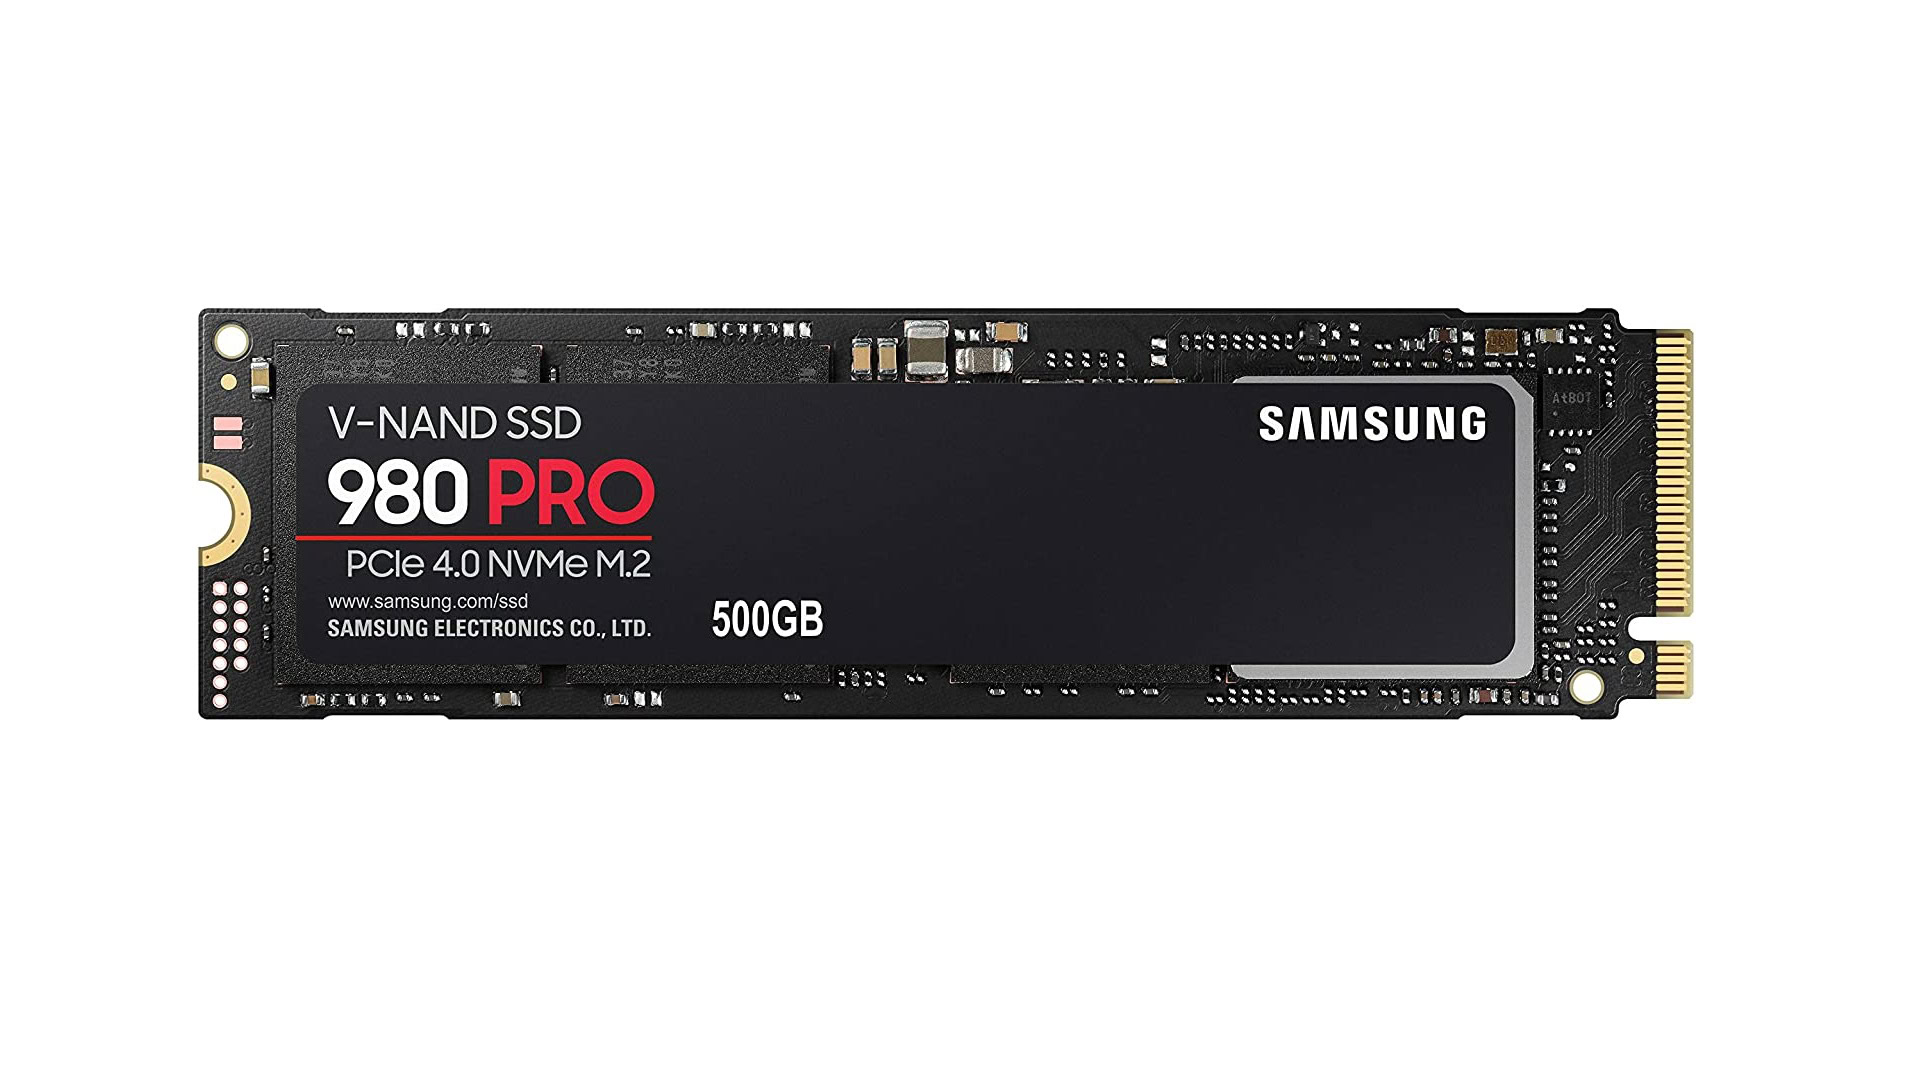 Samsung 980 Pro SSD on white background